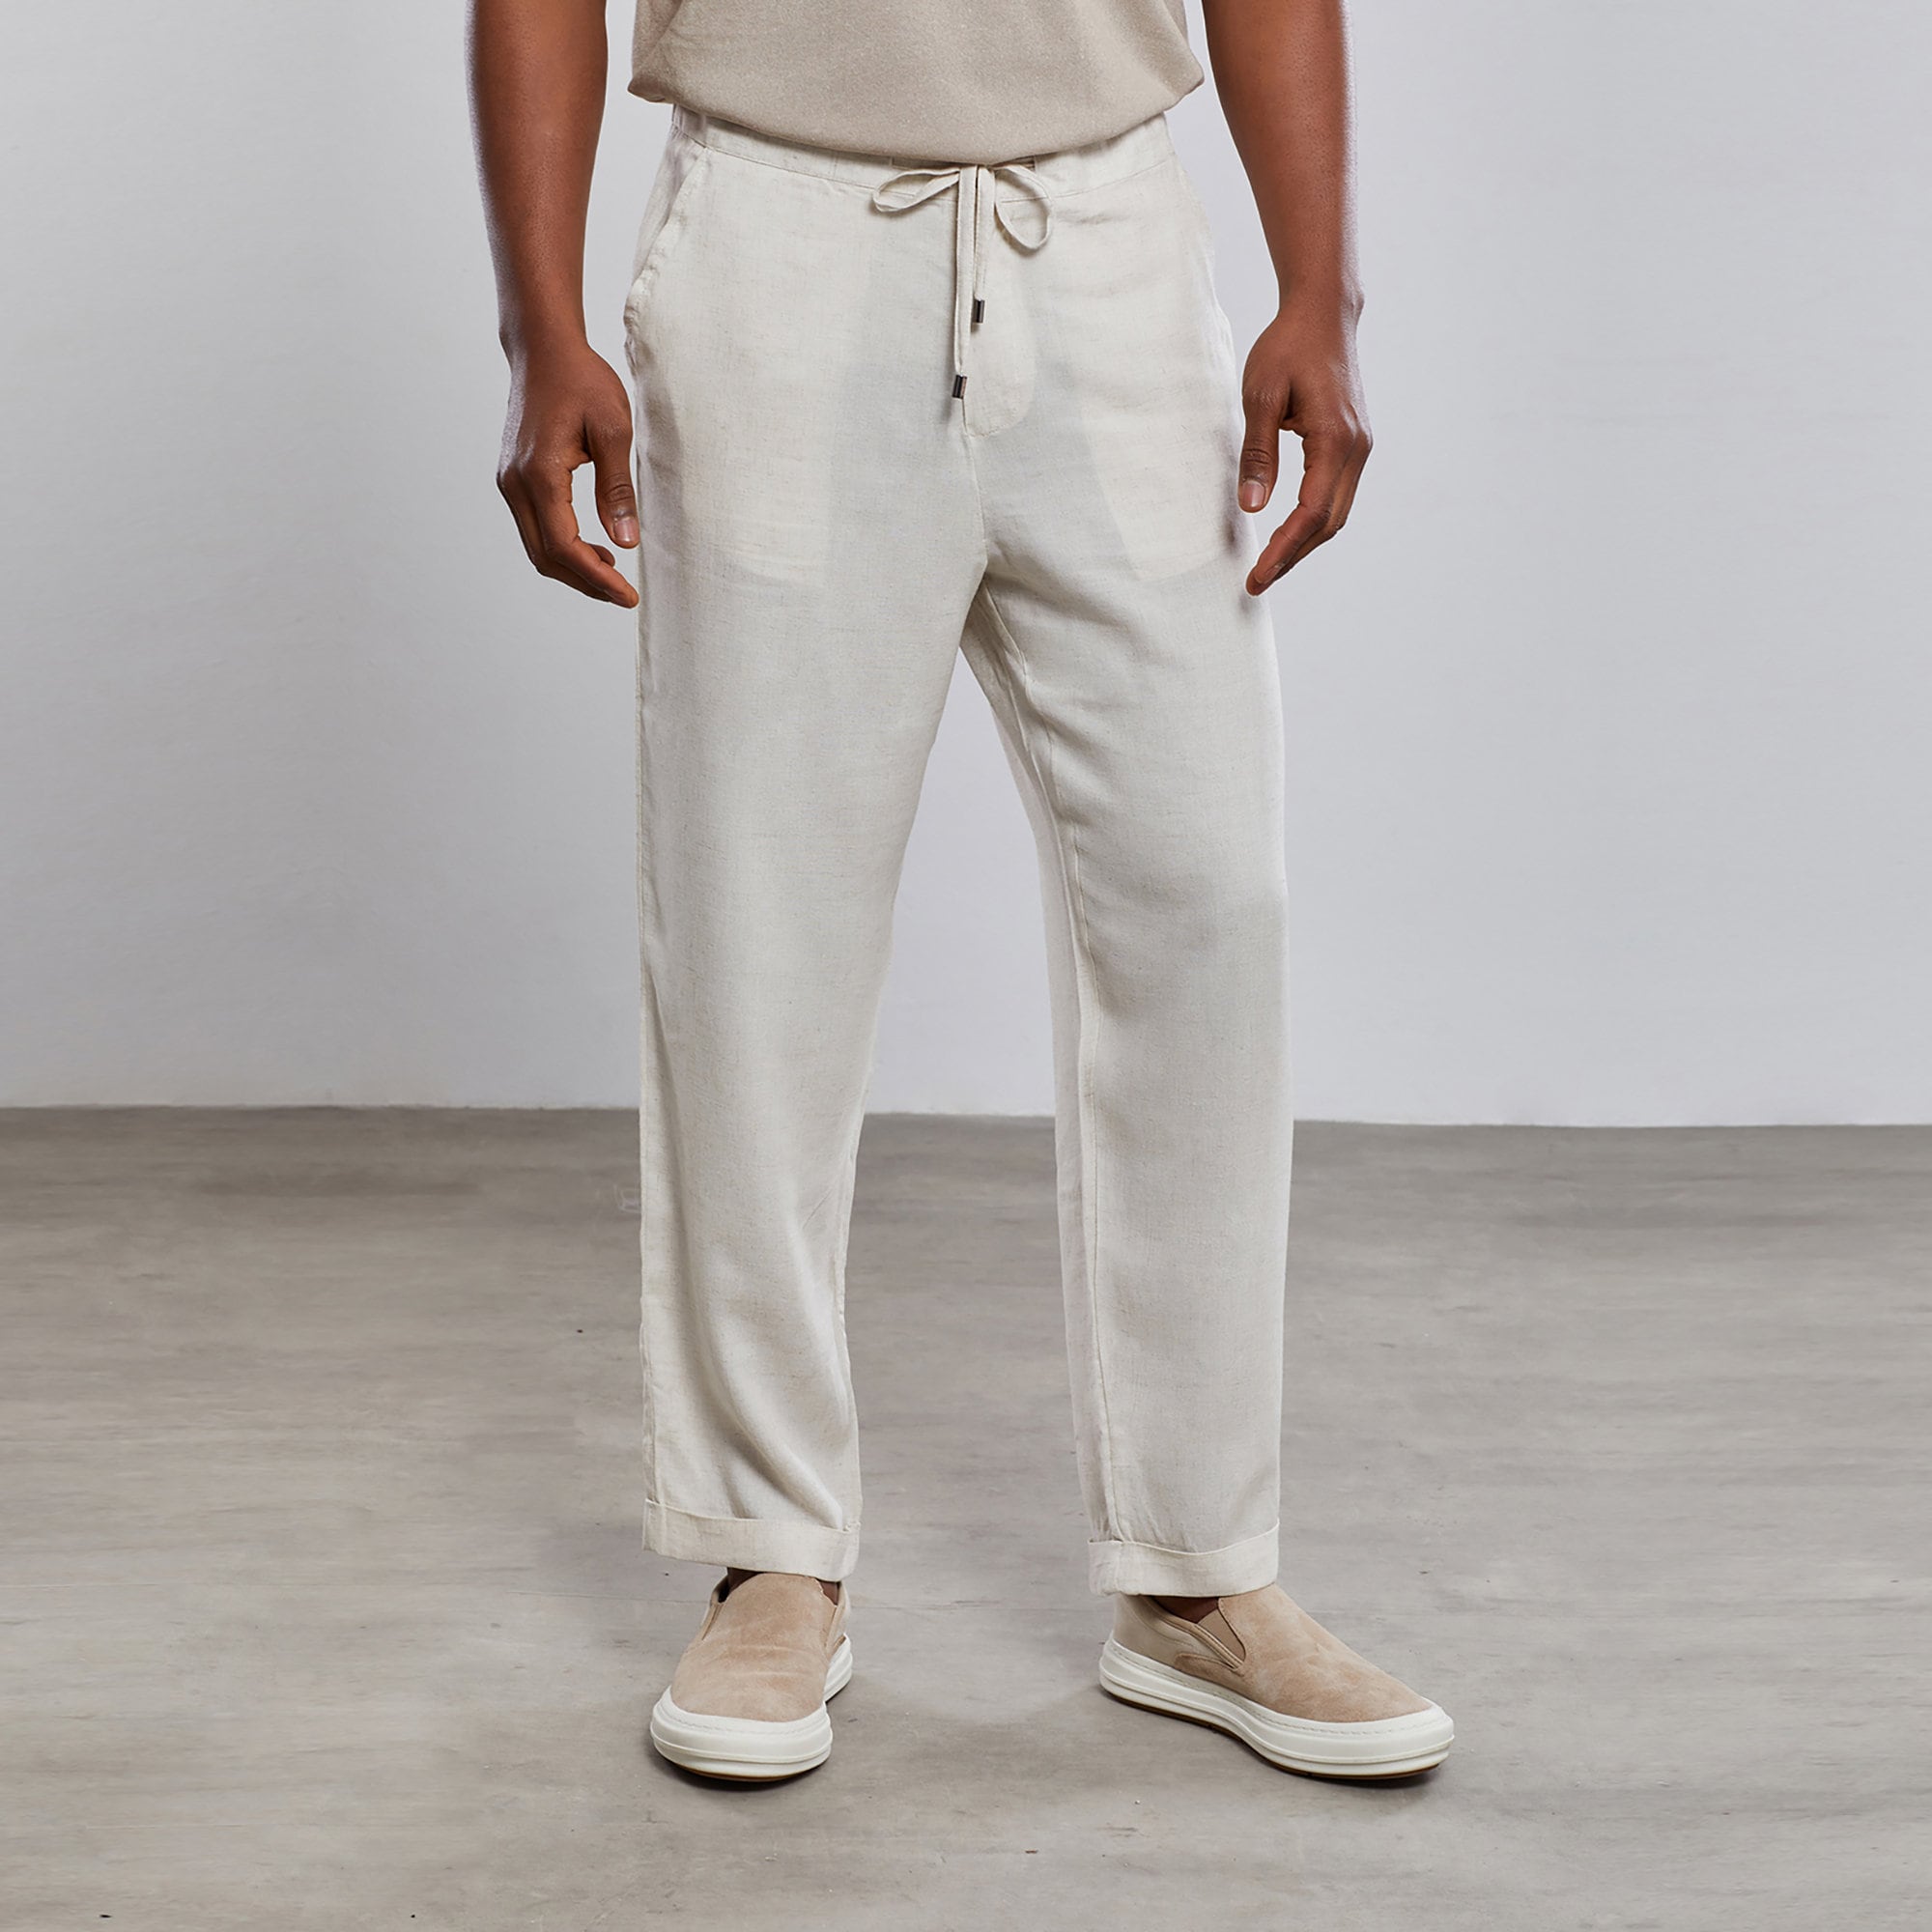 Carrot Fit Chino %100 Linen Pants,linen Pants Men,linen Men Style,linen  Mens Clothing,minimalist,relax Fit,summer Clouthing,summer Gift 